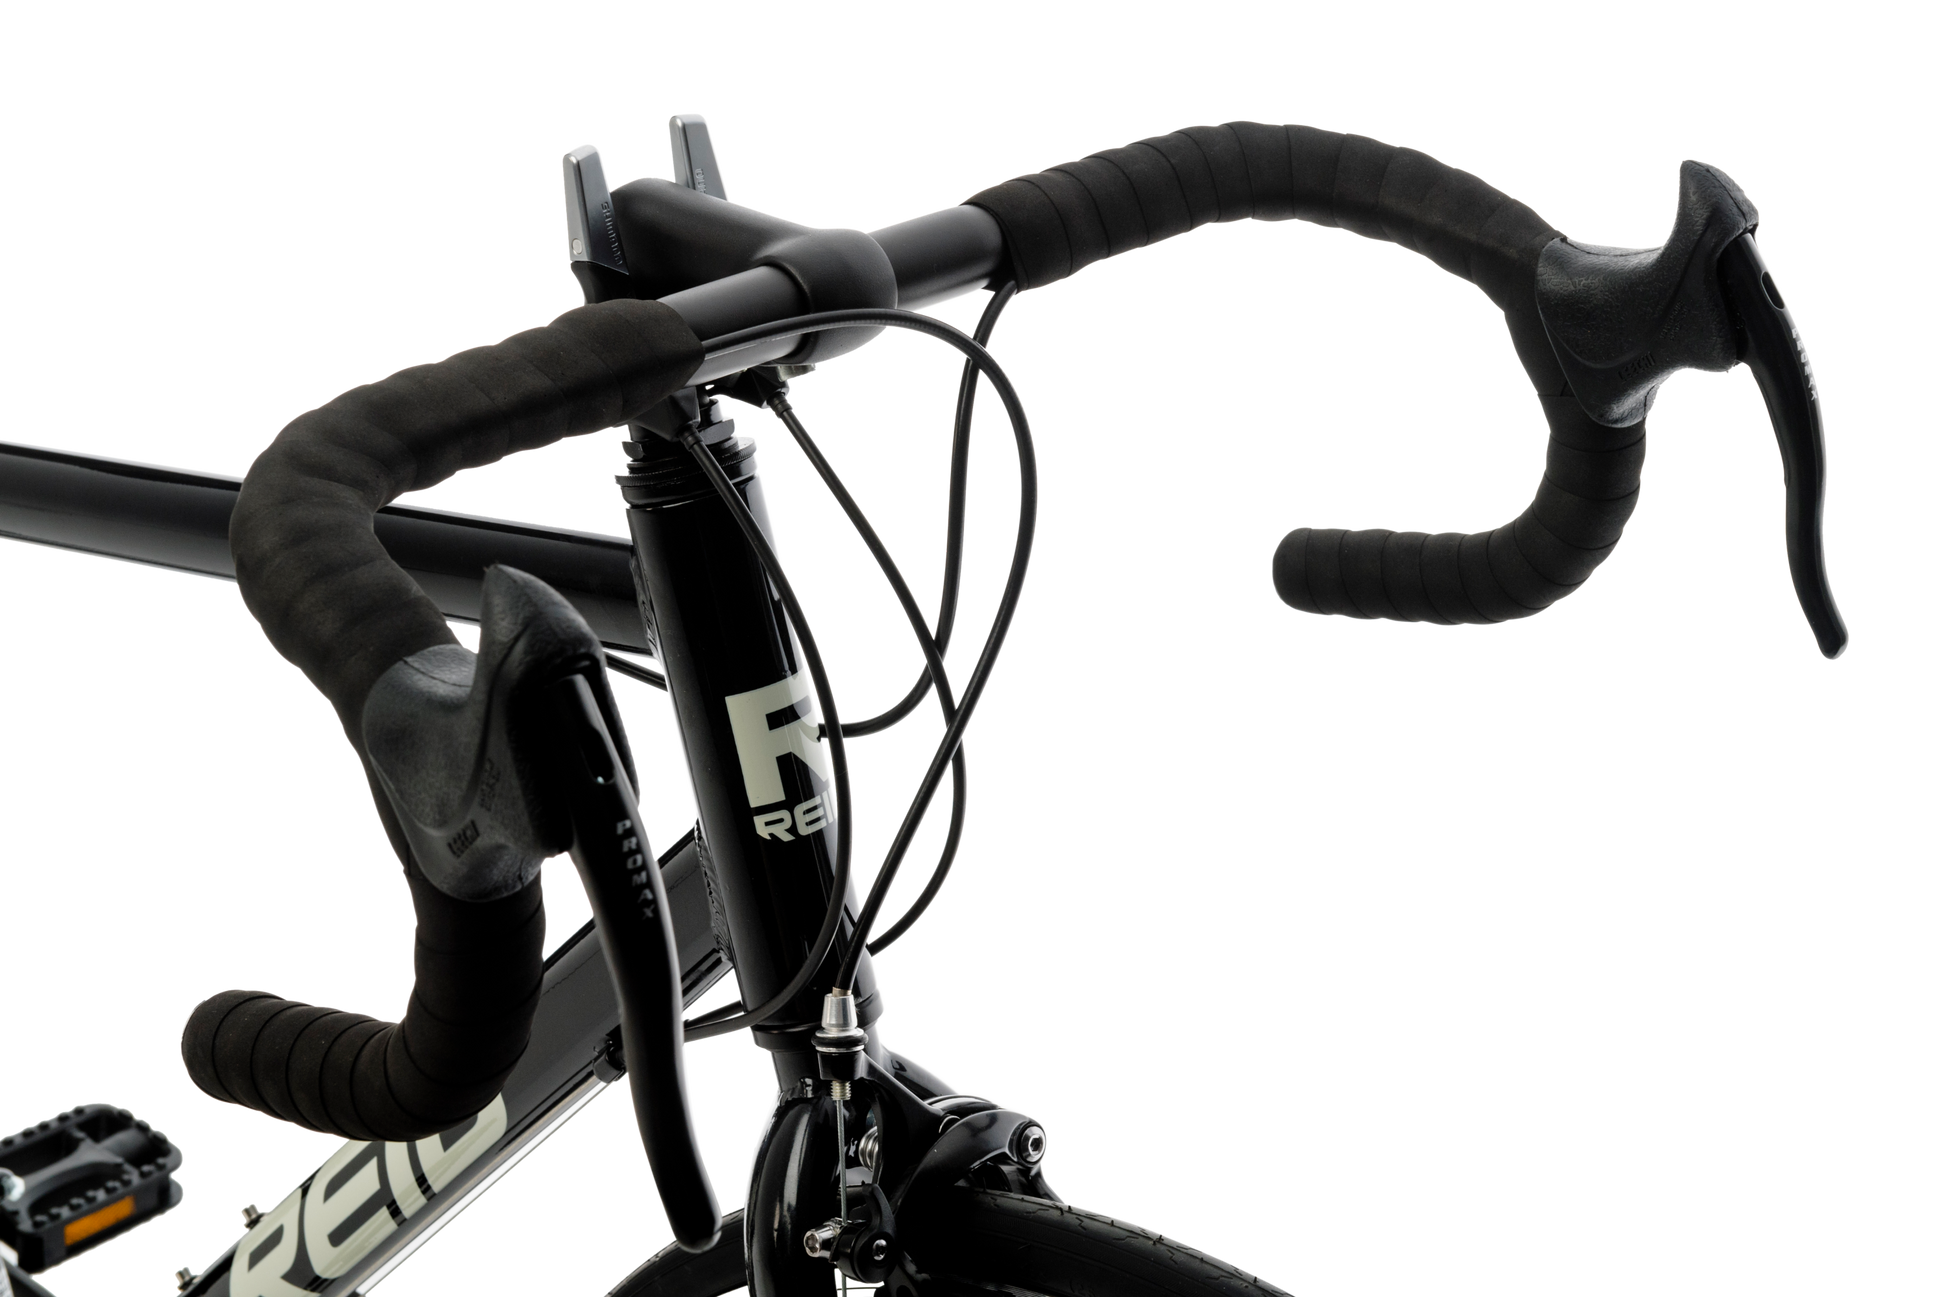 Rapid Dropbar Road Bike in black showing alloy race dropbar handlebars from Reid Cycles Australia